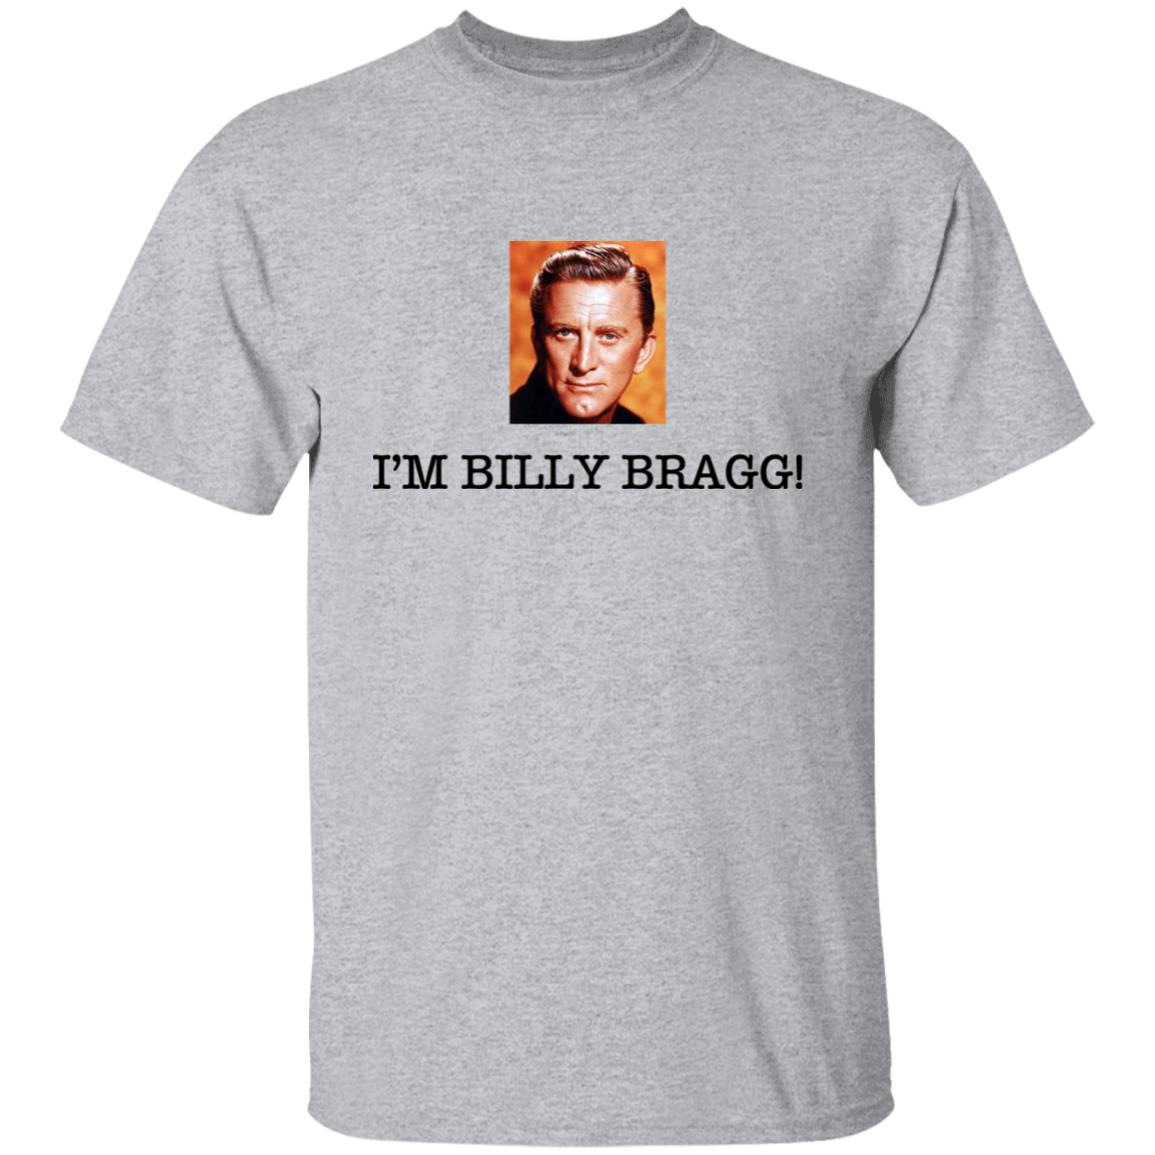 I’m Billy Bragg Shirt LGBT Cis